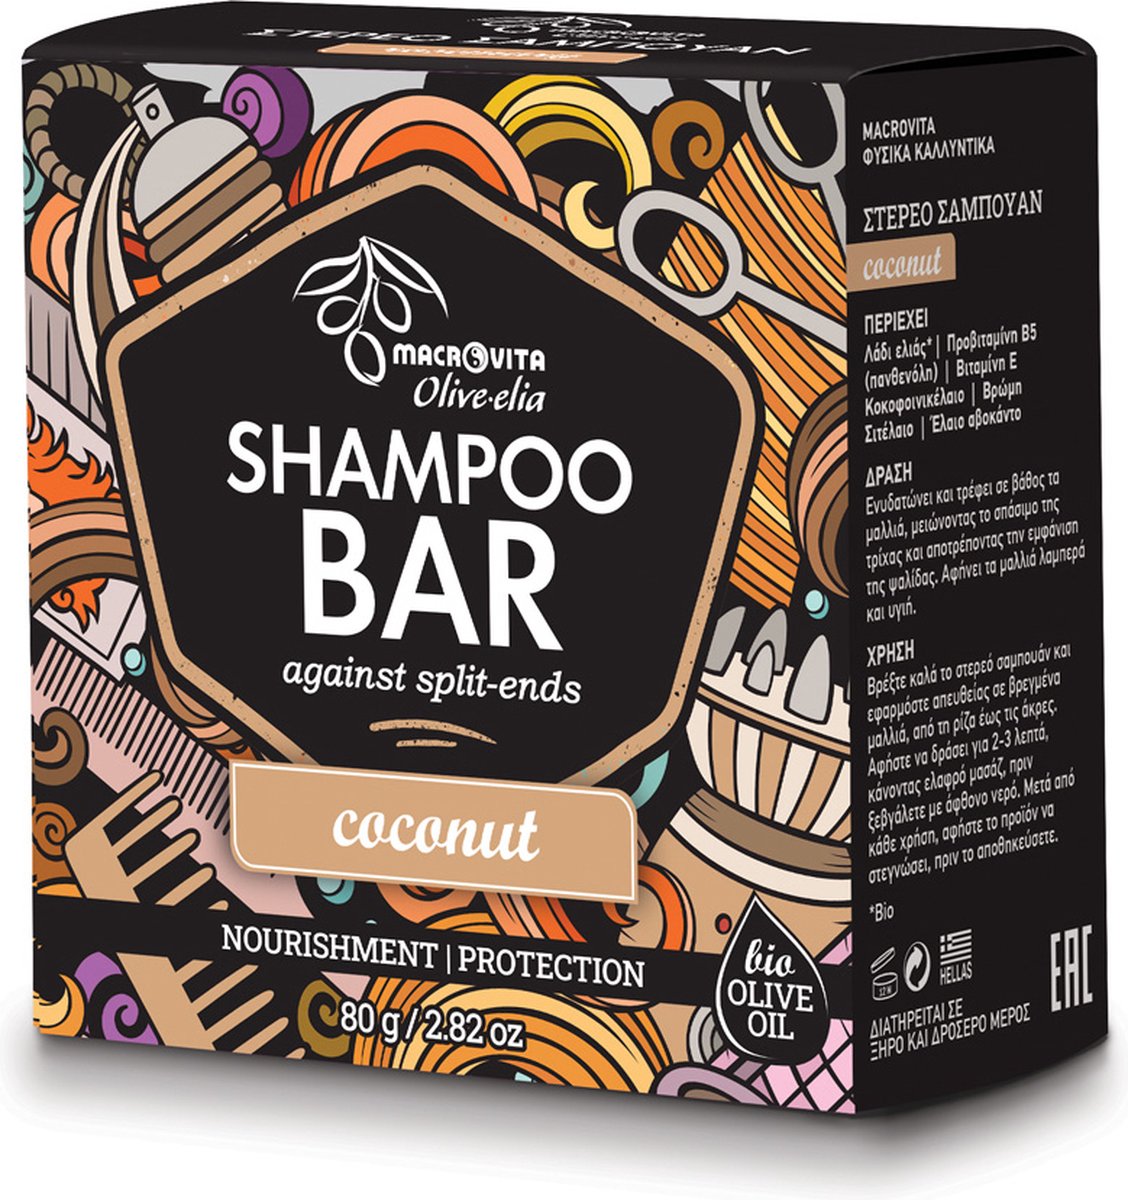 Olive-elia Shampoo Bar tegen Gespleten Haarpunten (Kokos) - 80 gram